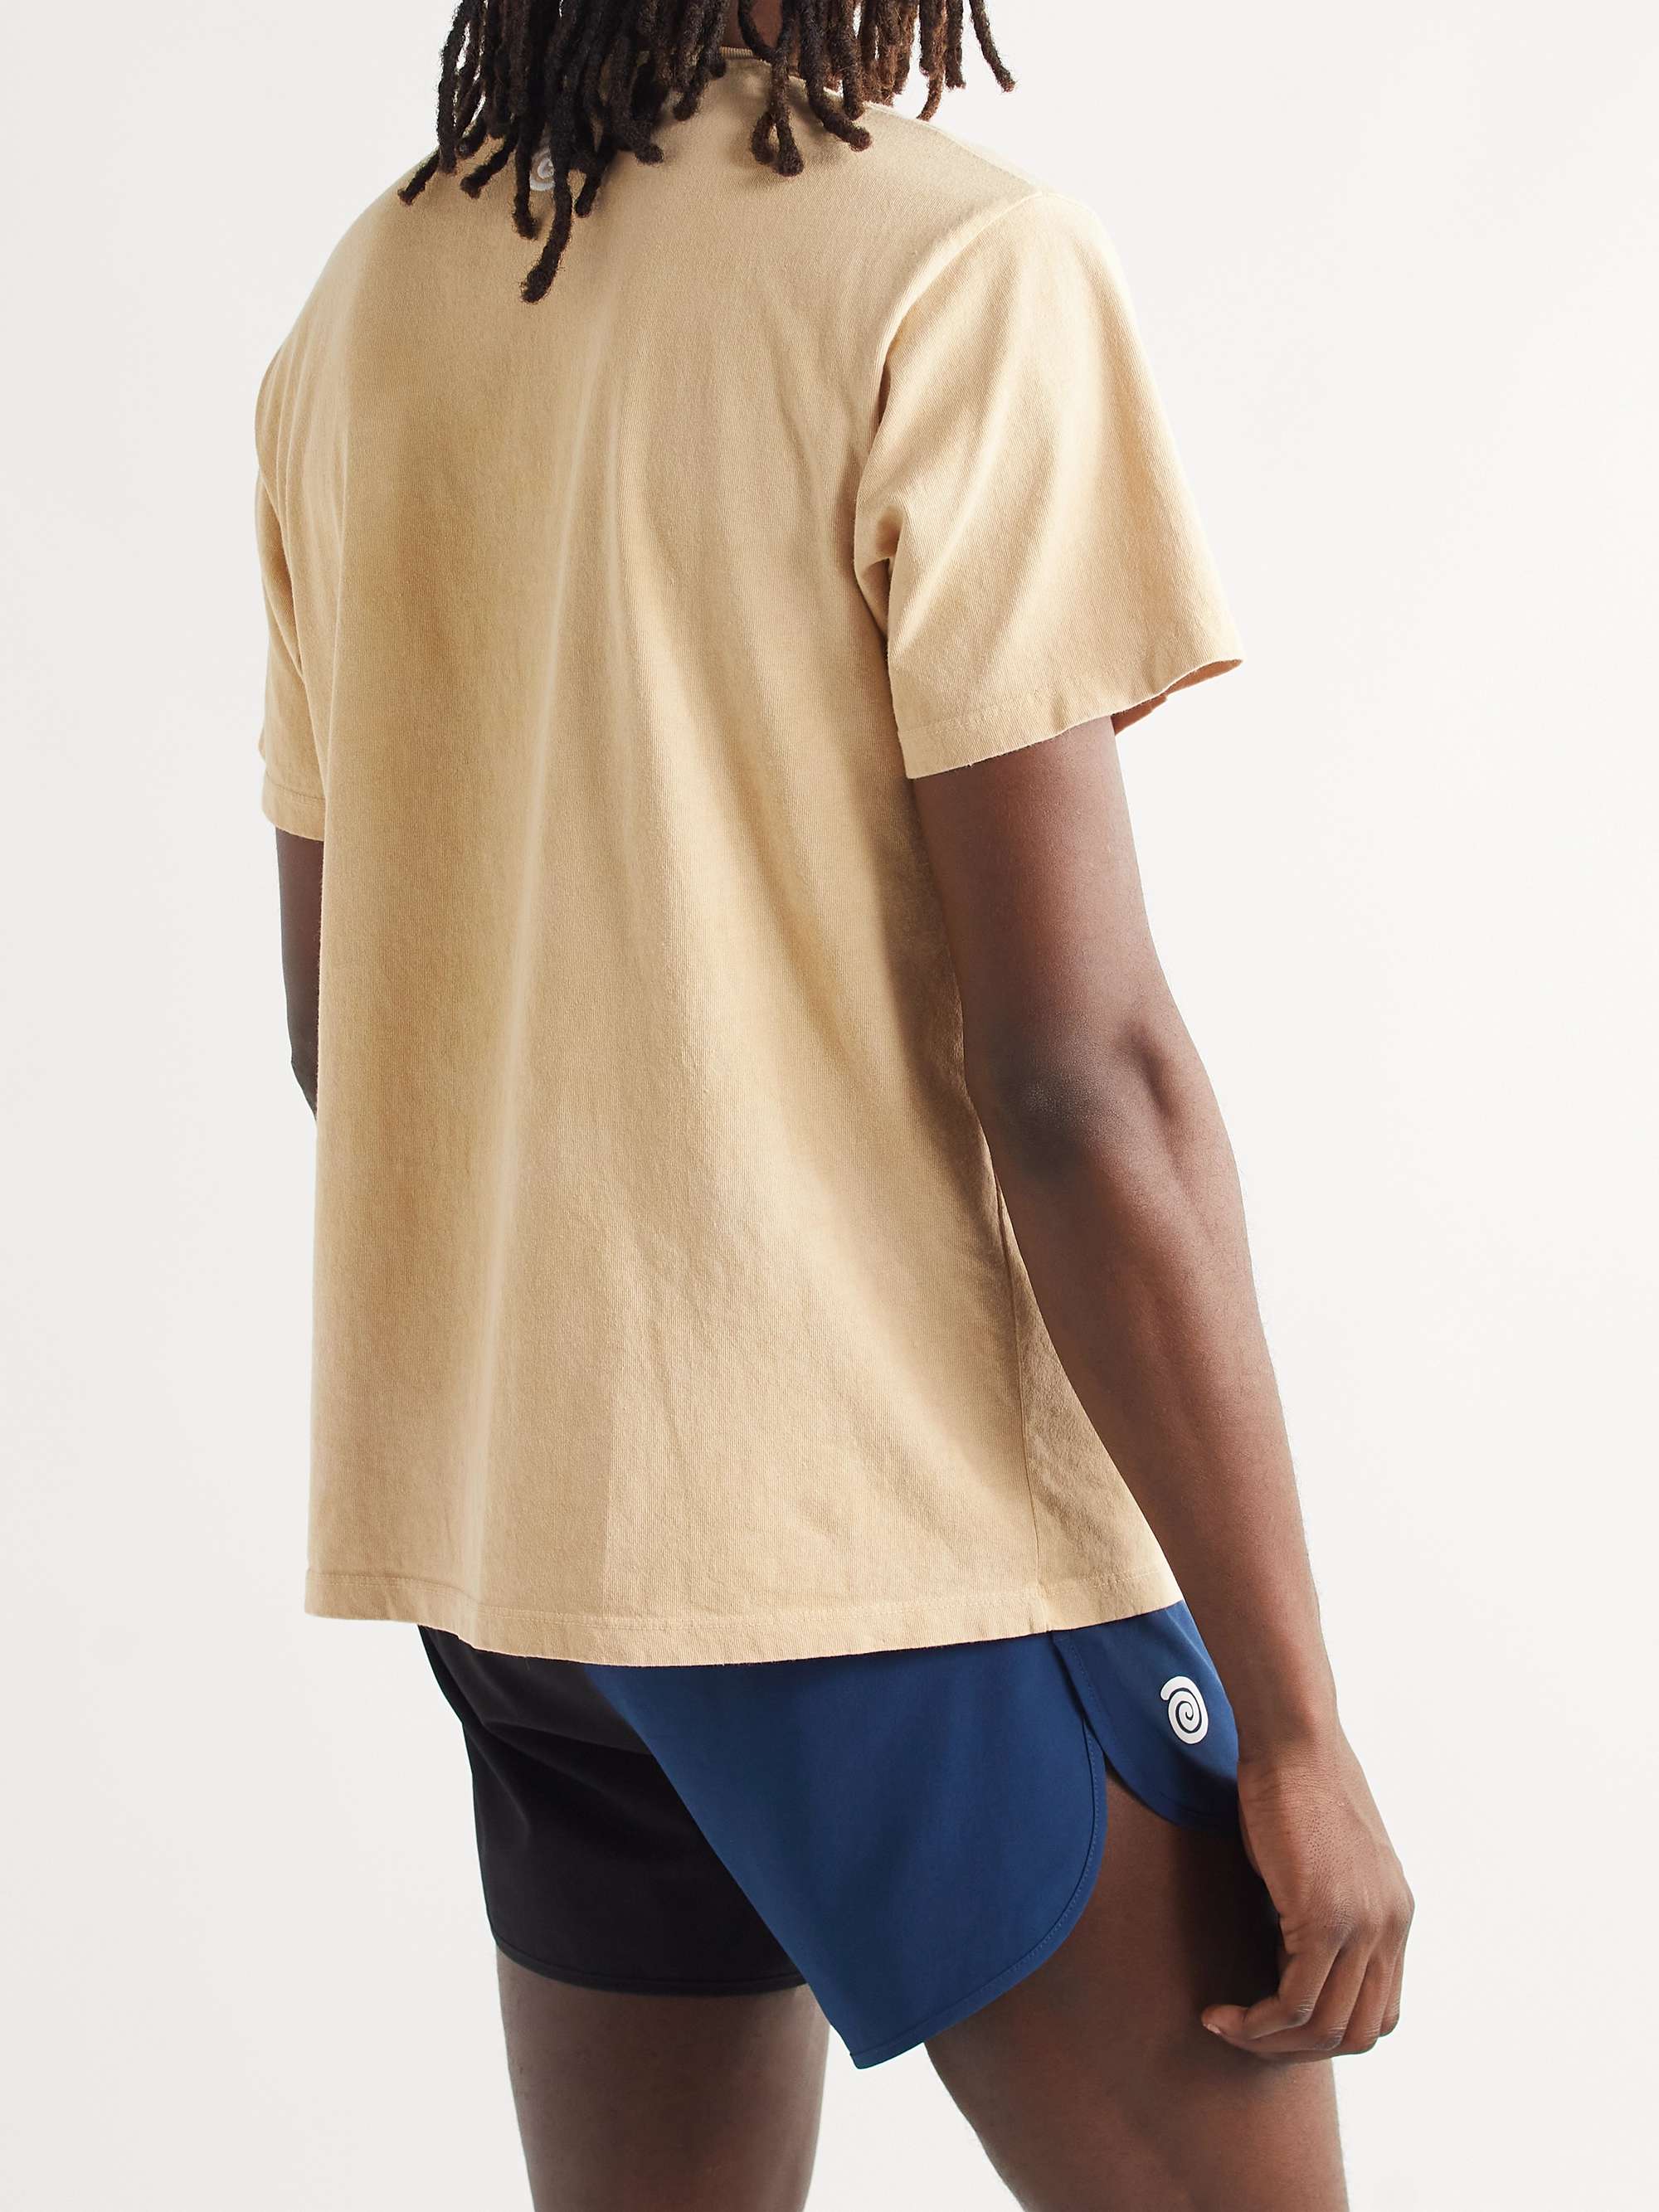 DISTRICT VISION + MR PORTER Health In Mind Karuna Recycled Cotton-Blend Jersey T-Shirt